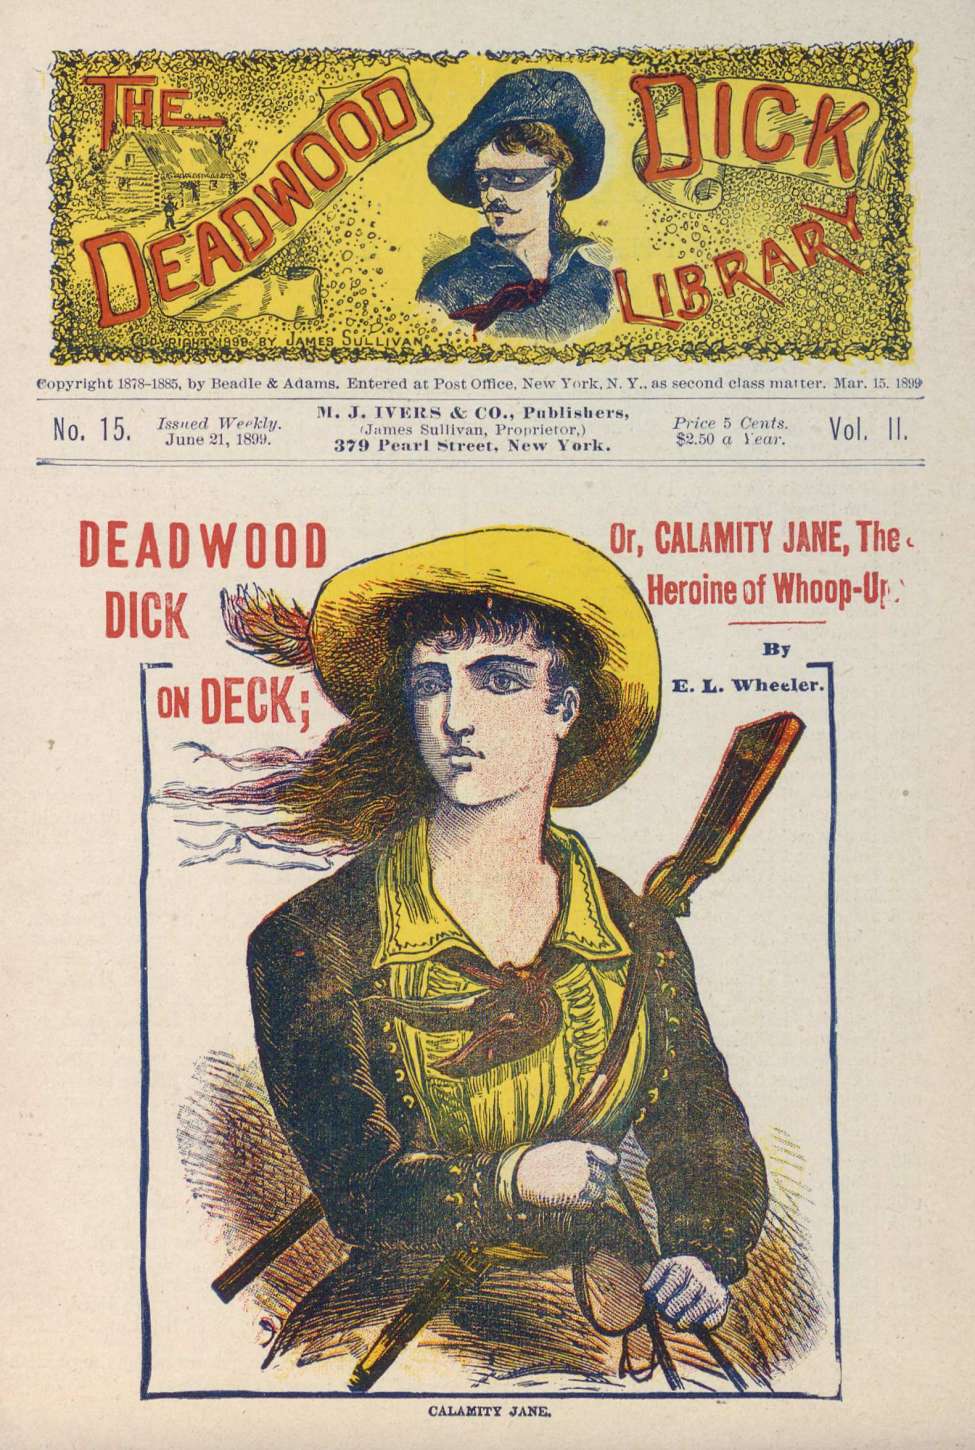 Book Cover For Deadwood Dick Library v2 15 - Deadwood Dick On Deck